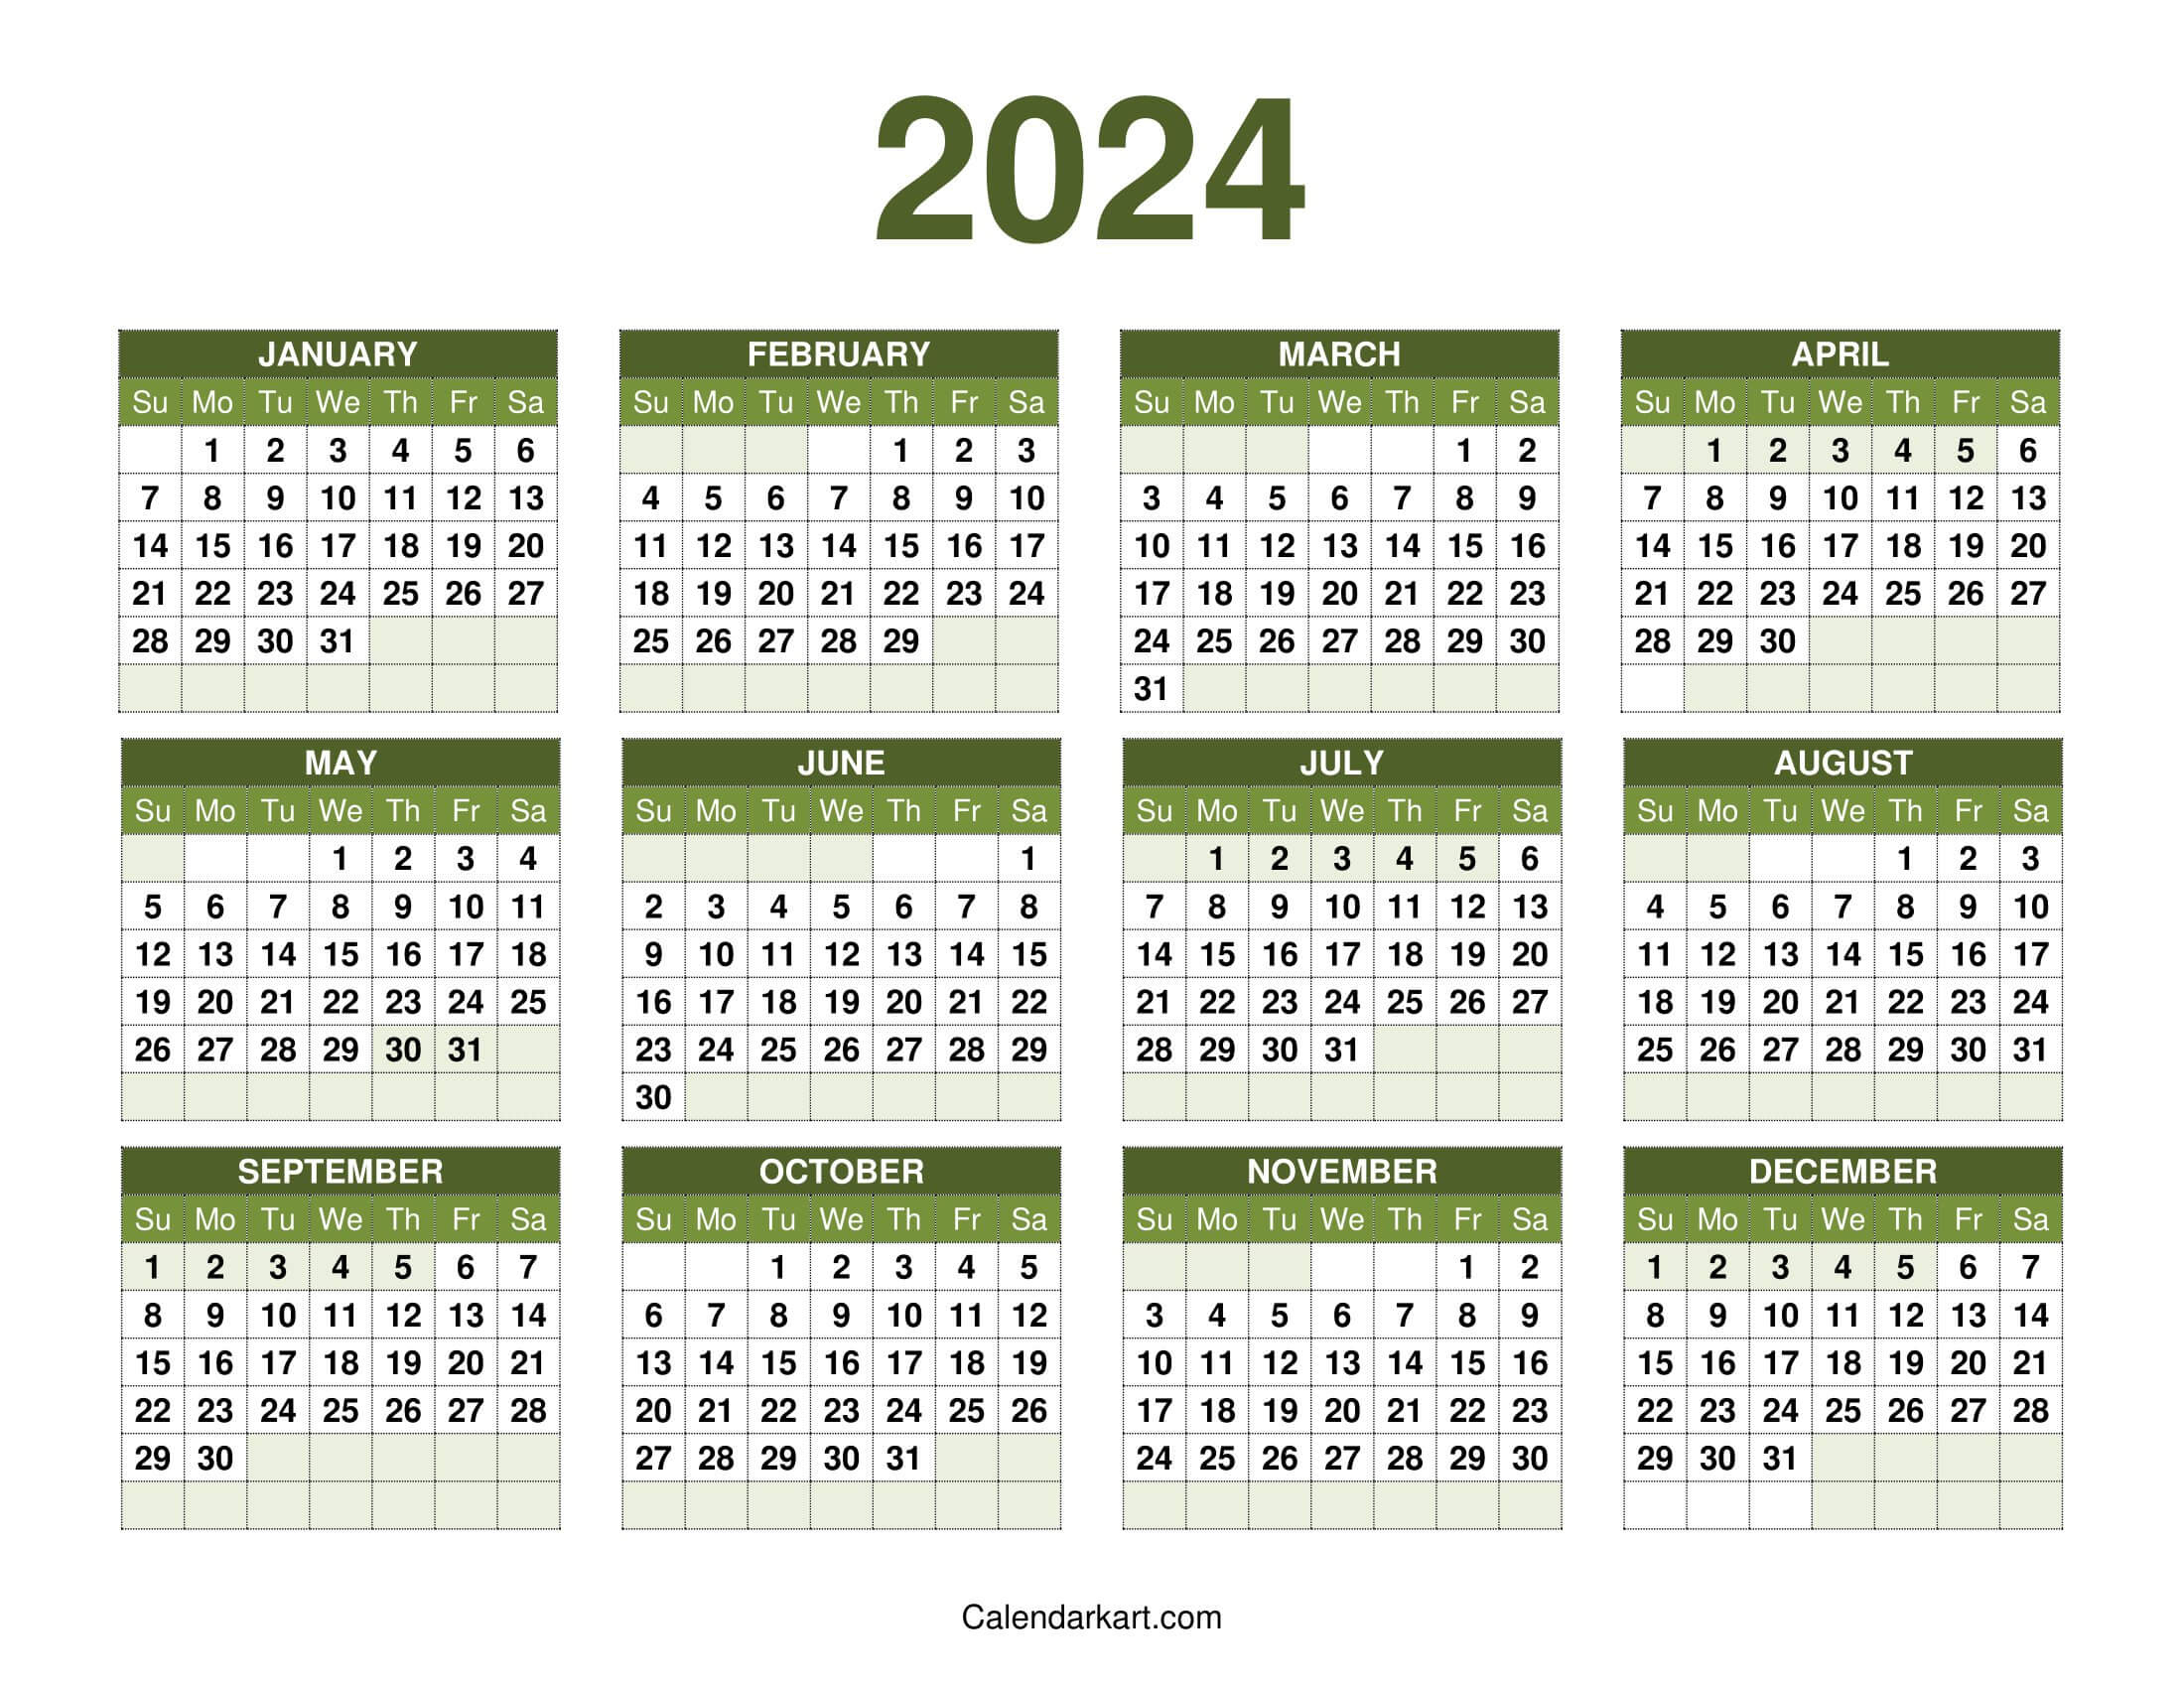 Free Printable Year At A Glance Calendar 2023-2024 - Calendarkart | Calendar Of 2024